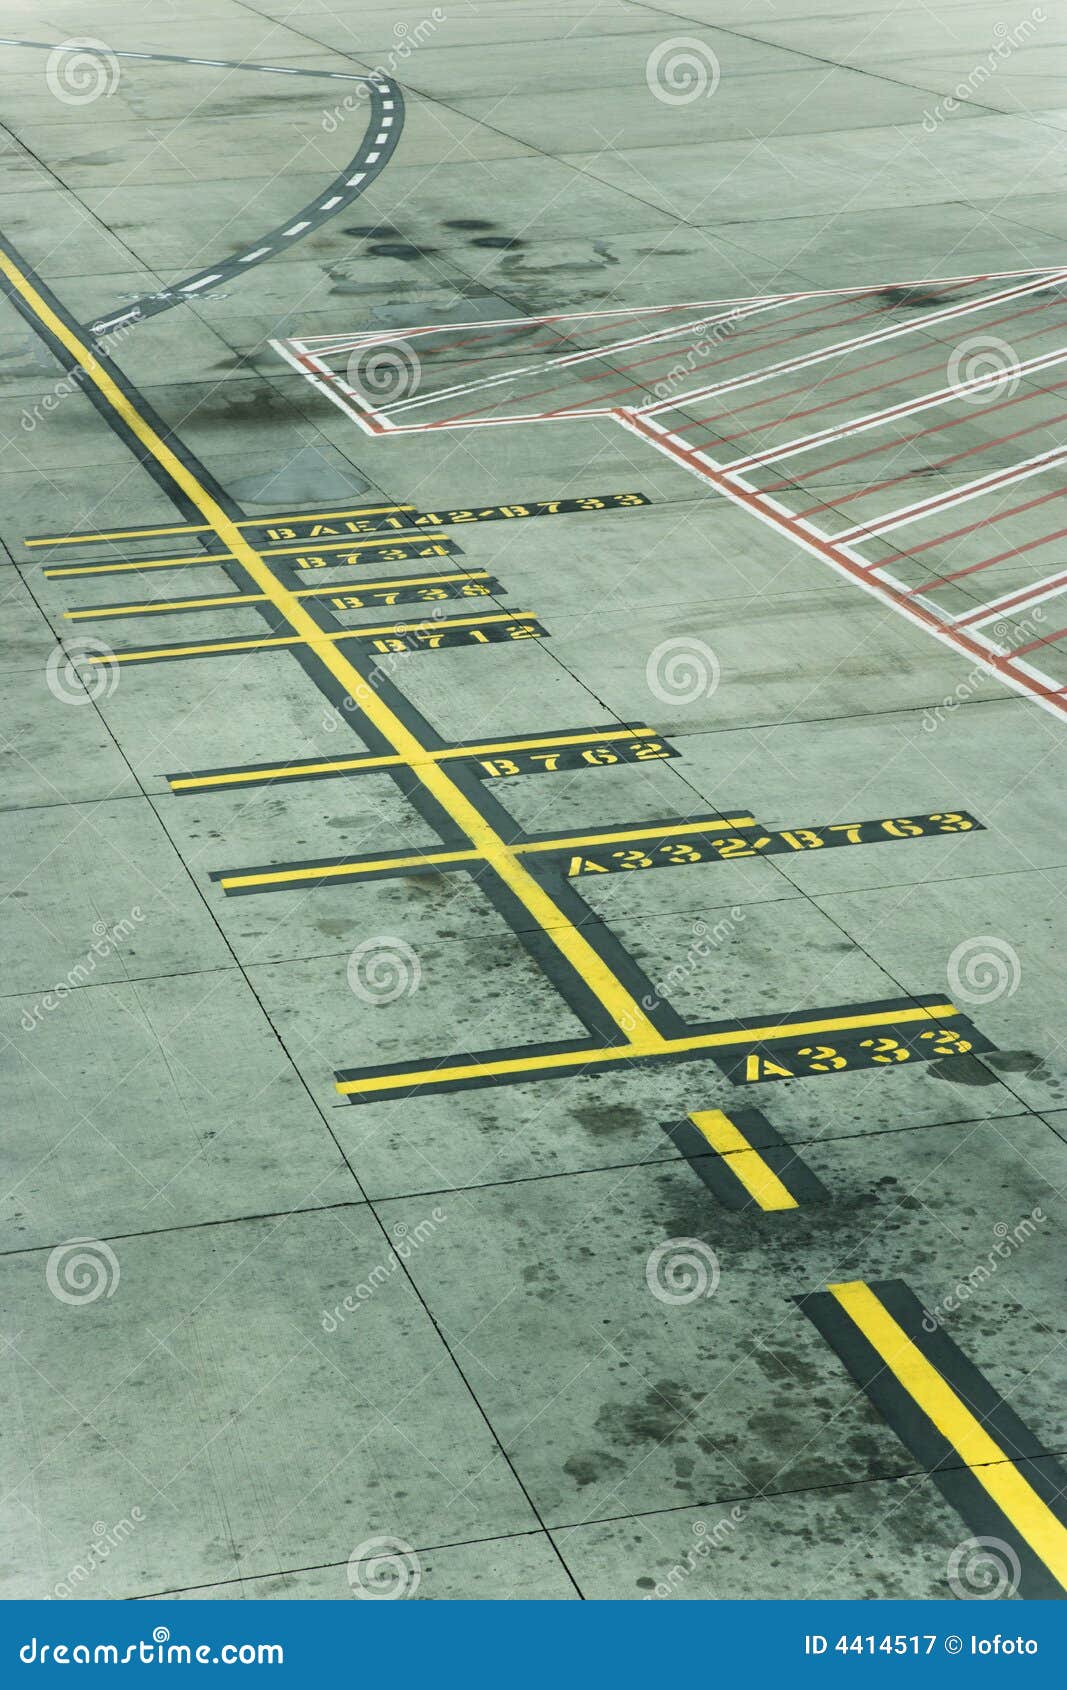 melbourne airport runway